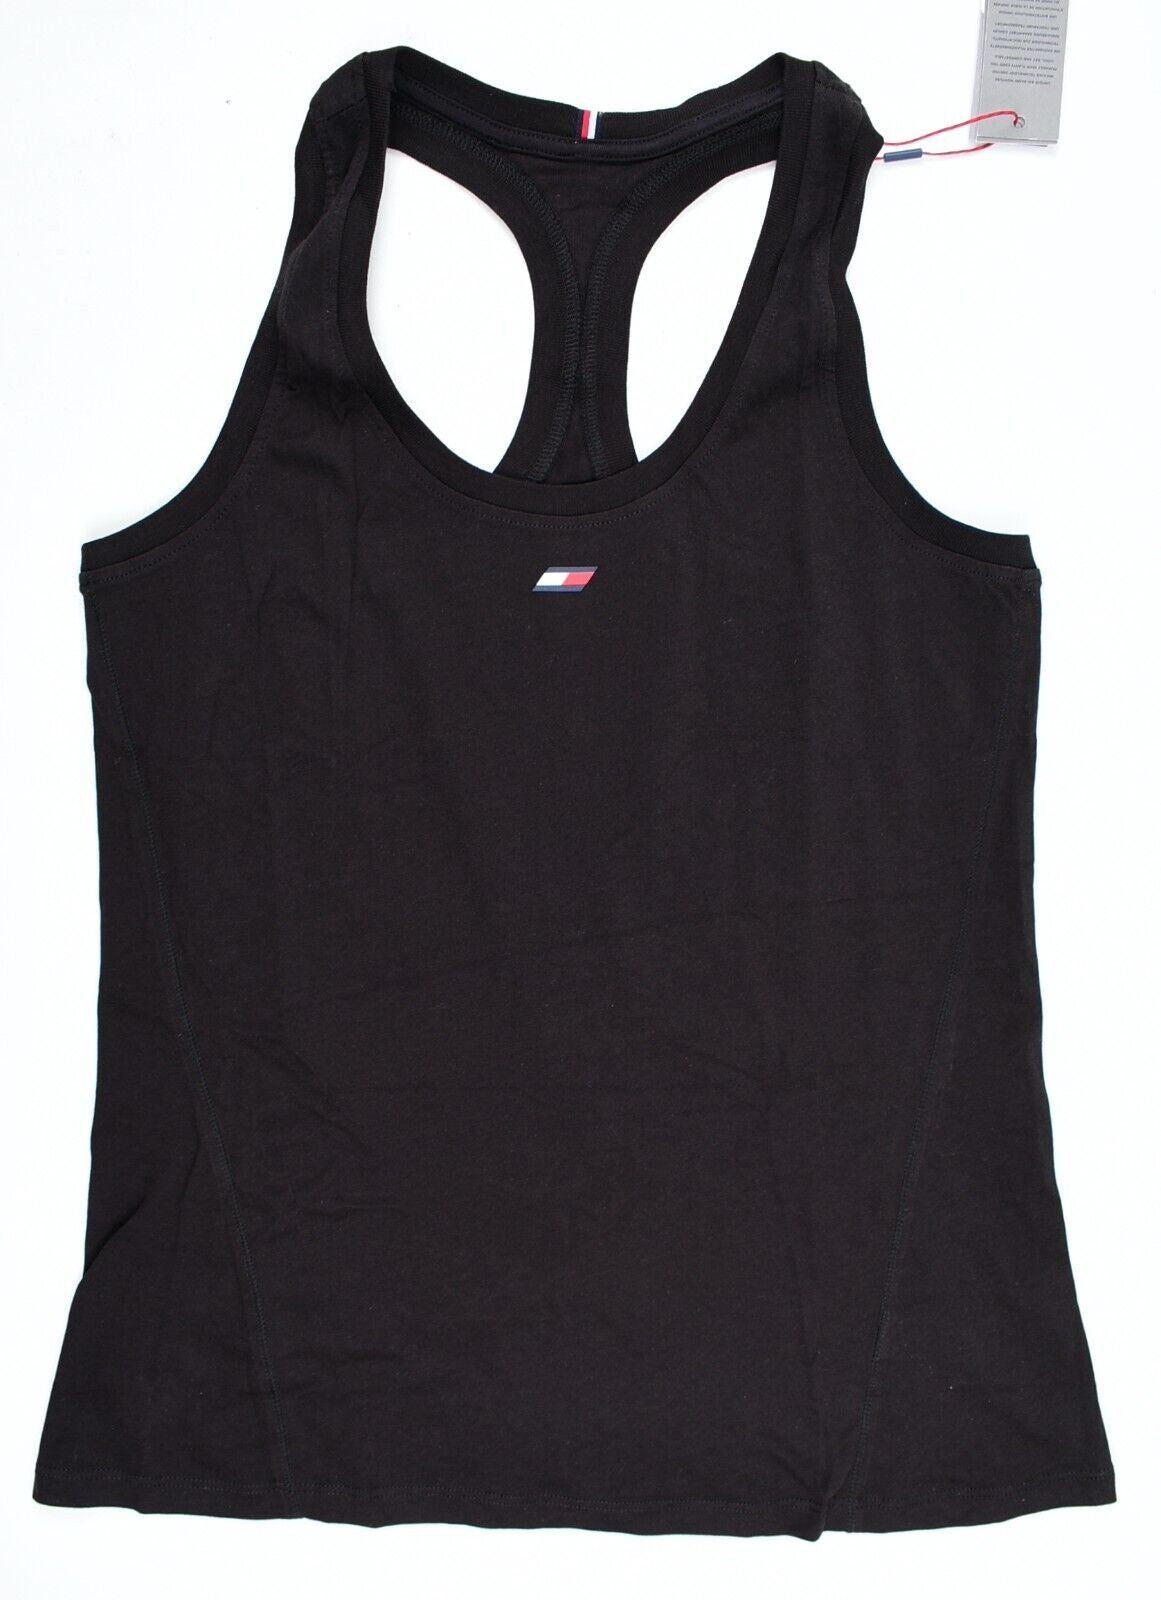 TOMMY HILFIGER Womens Performance Cotton Tank Top, Black, size S /UK 10